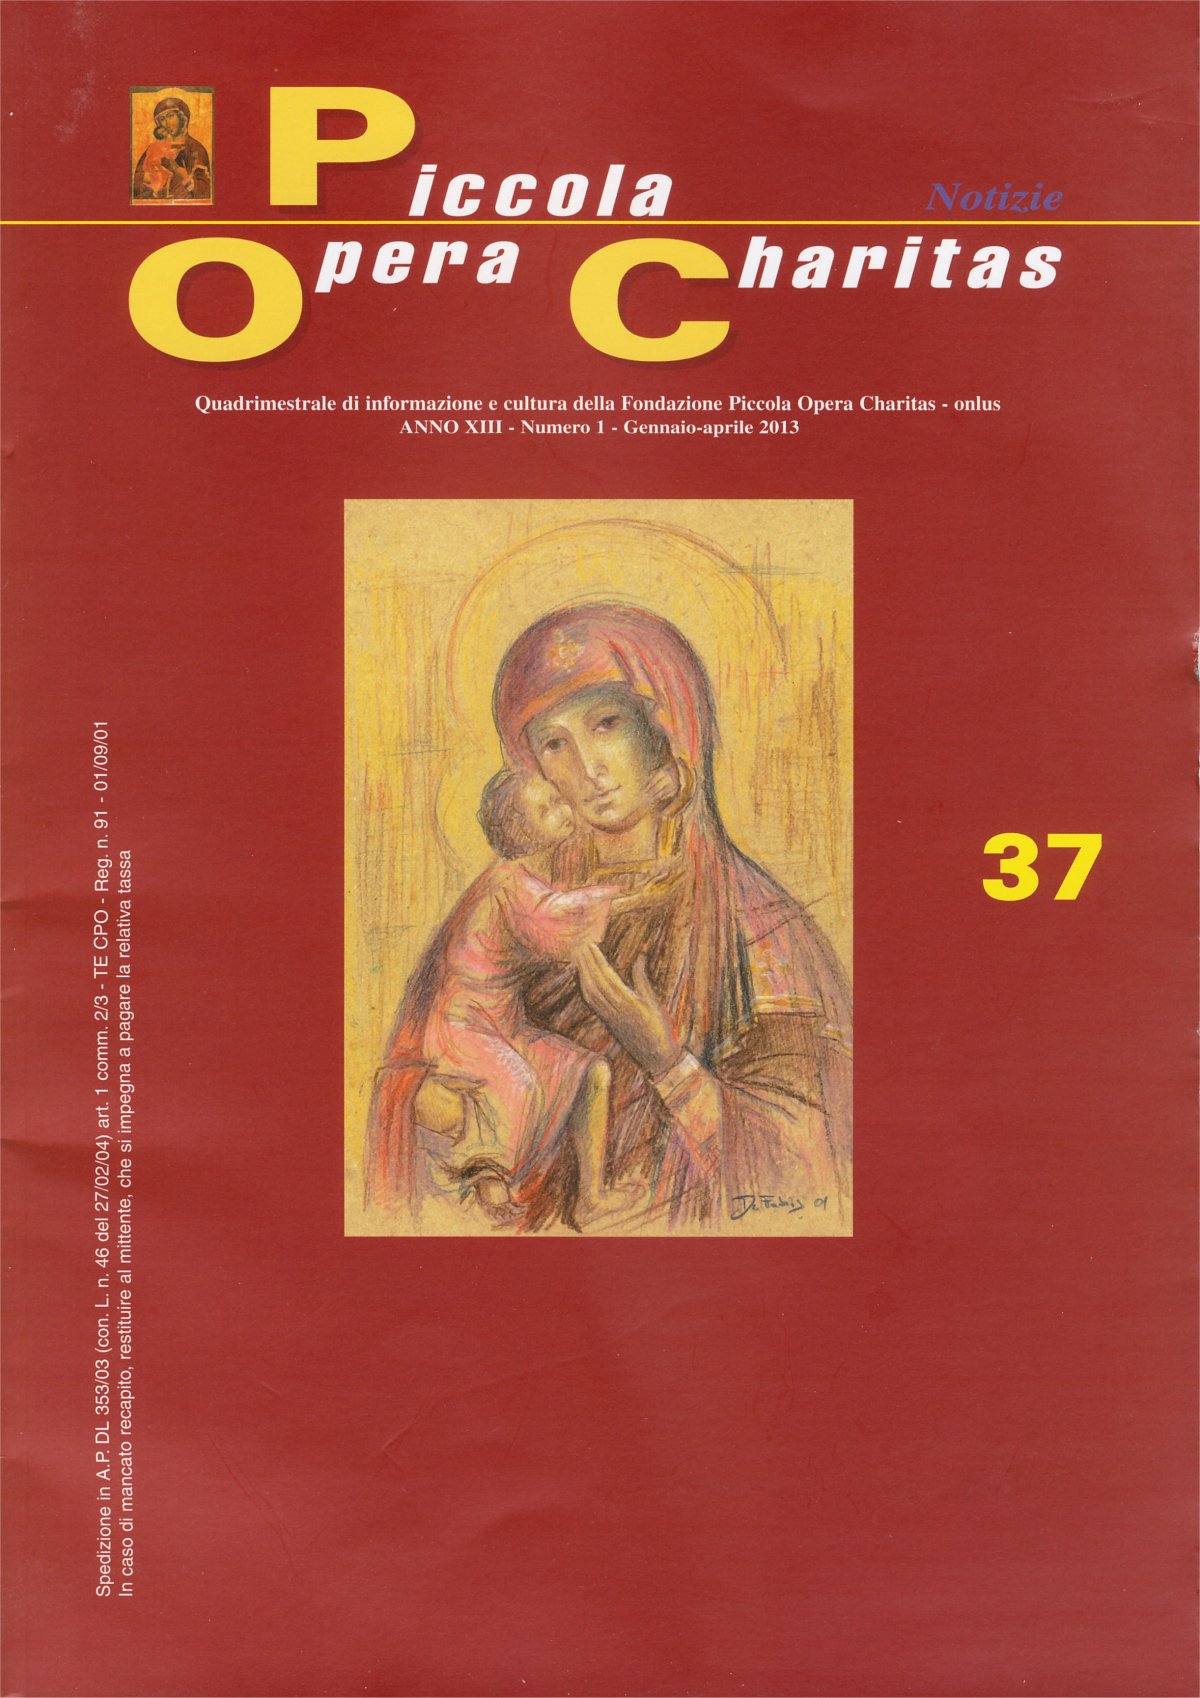 Piccola Opera Charitas, anno XIII, n. 1, gennaio-aprile 2013